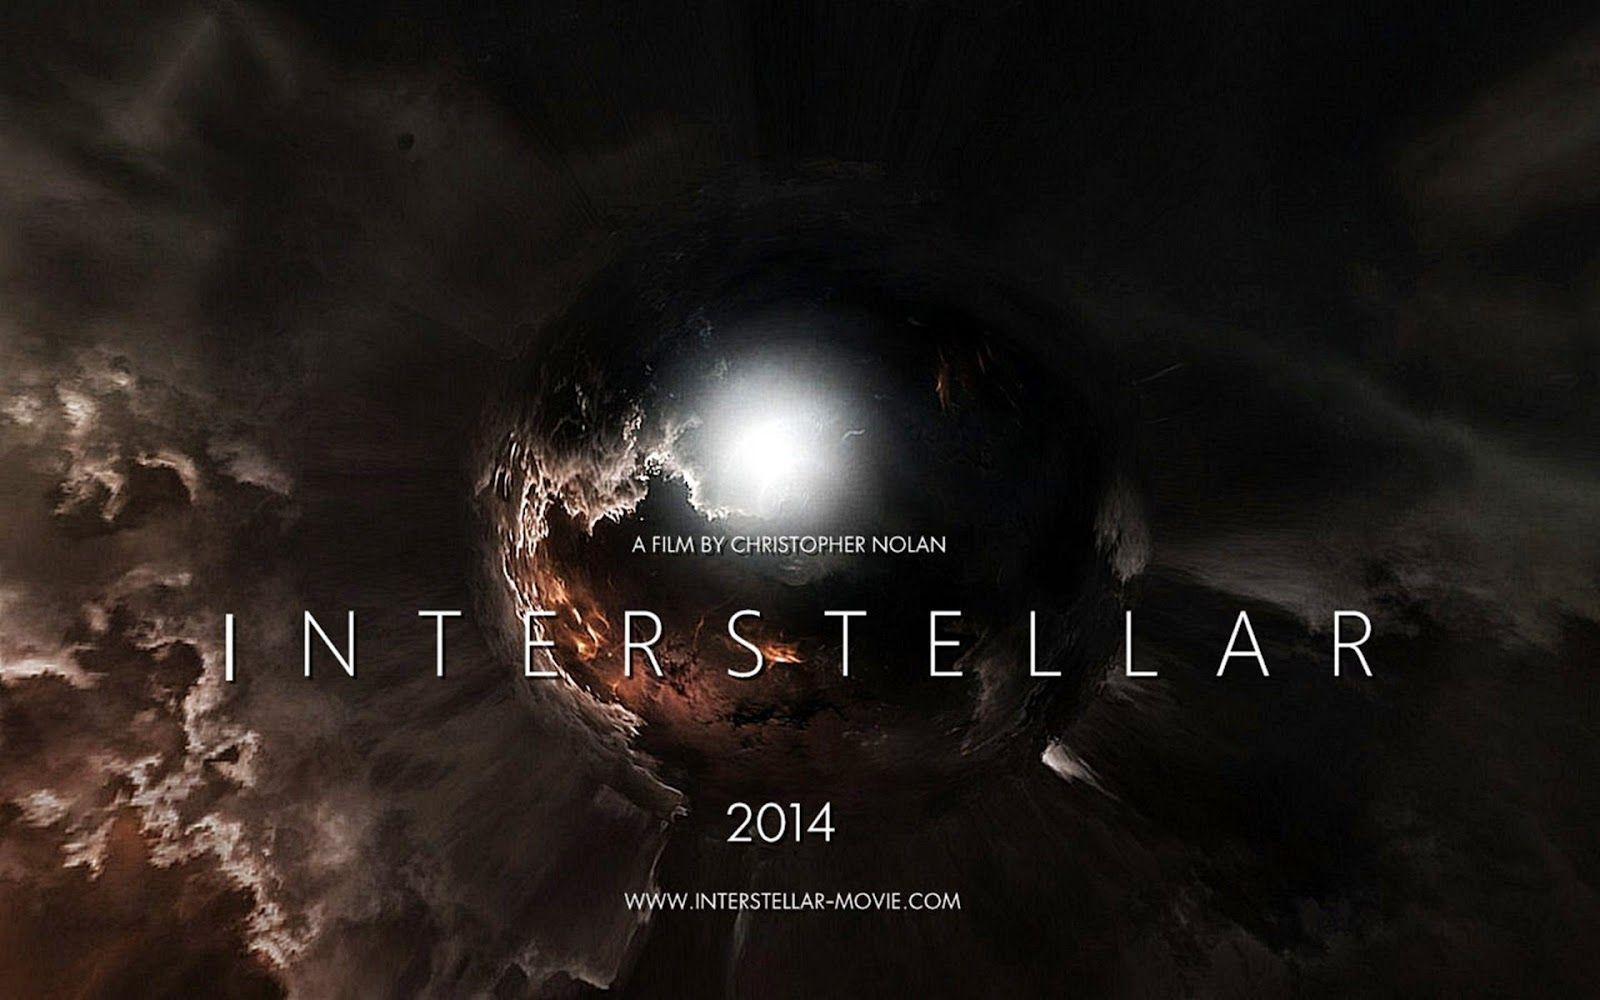 NASA Interstellar Movie Logo - interstellar movie explained ~ Charvo's talk on movie